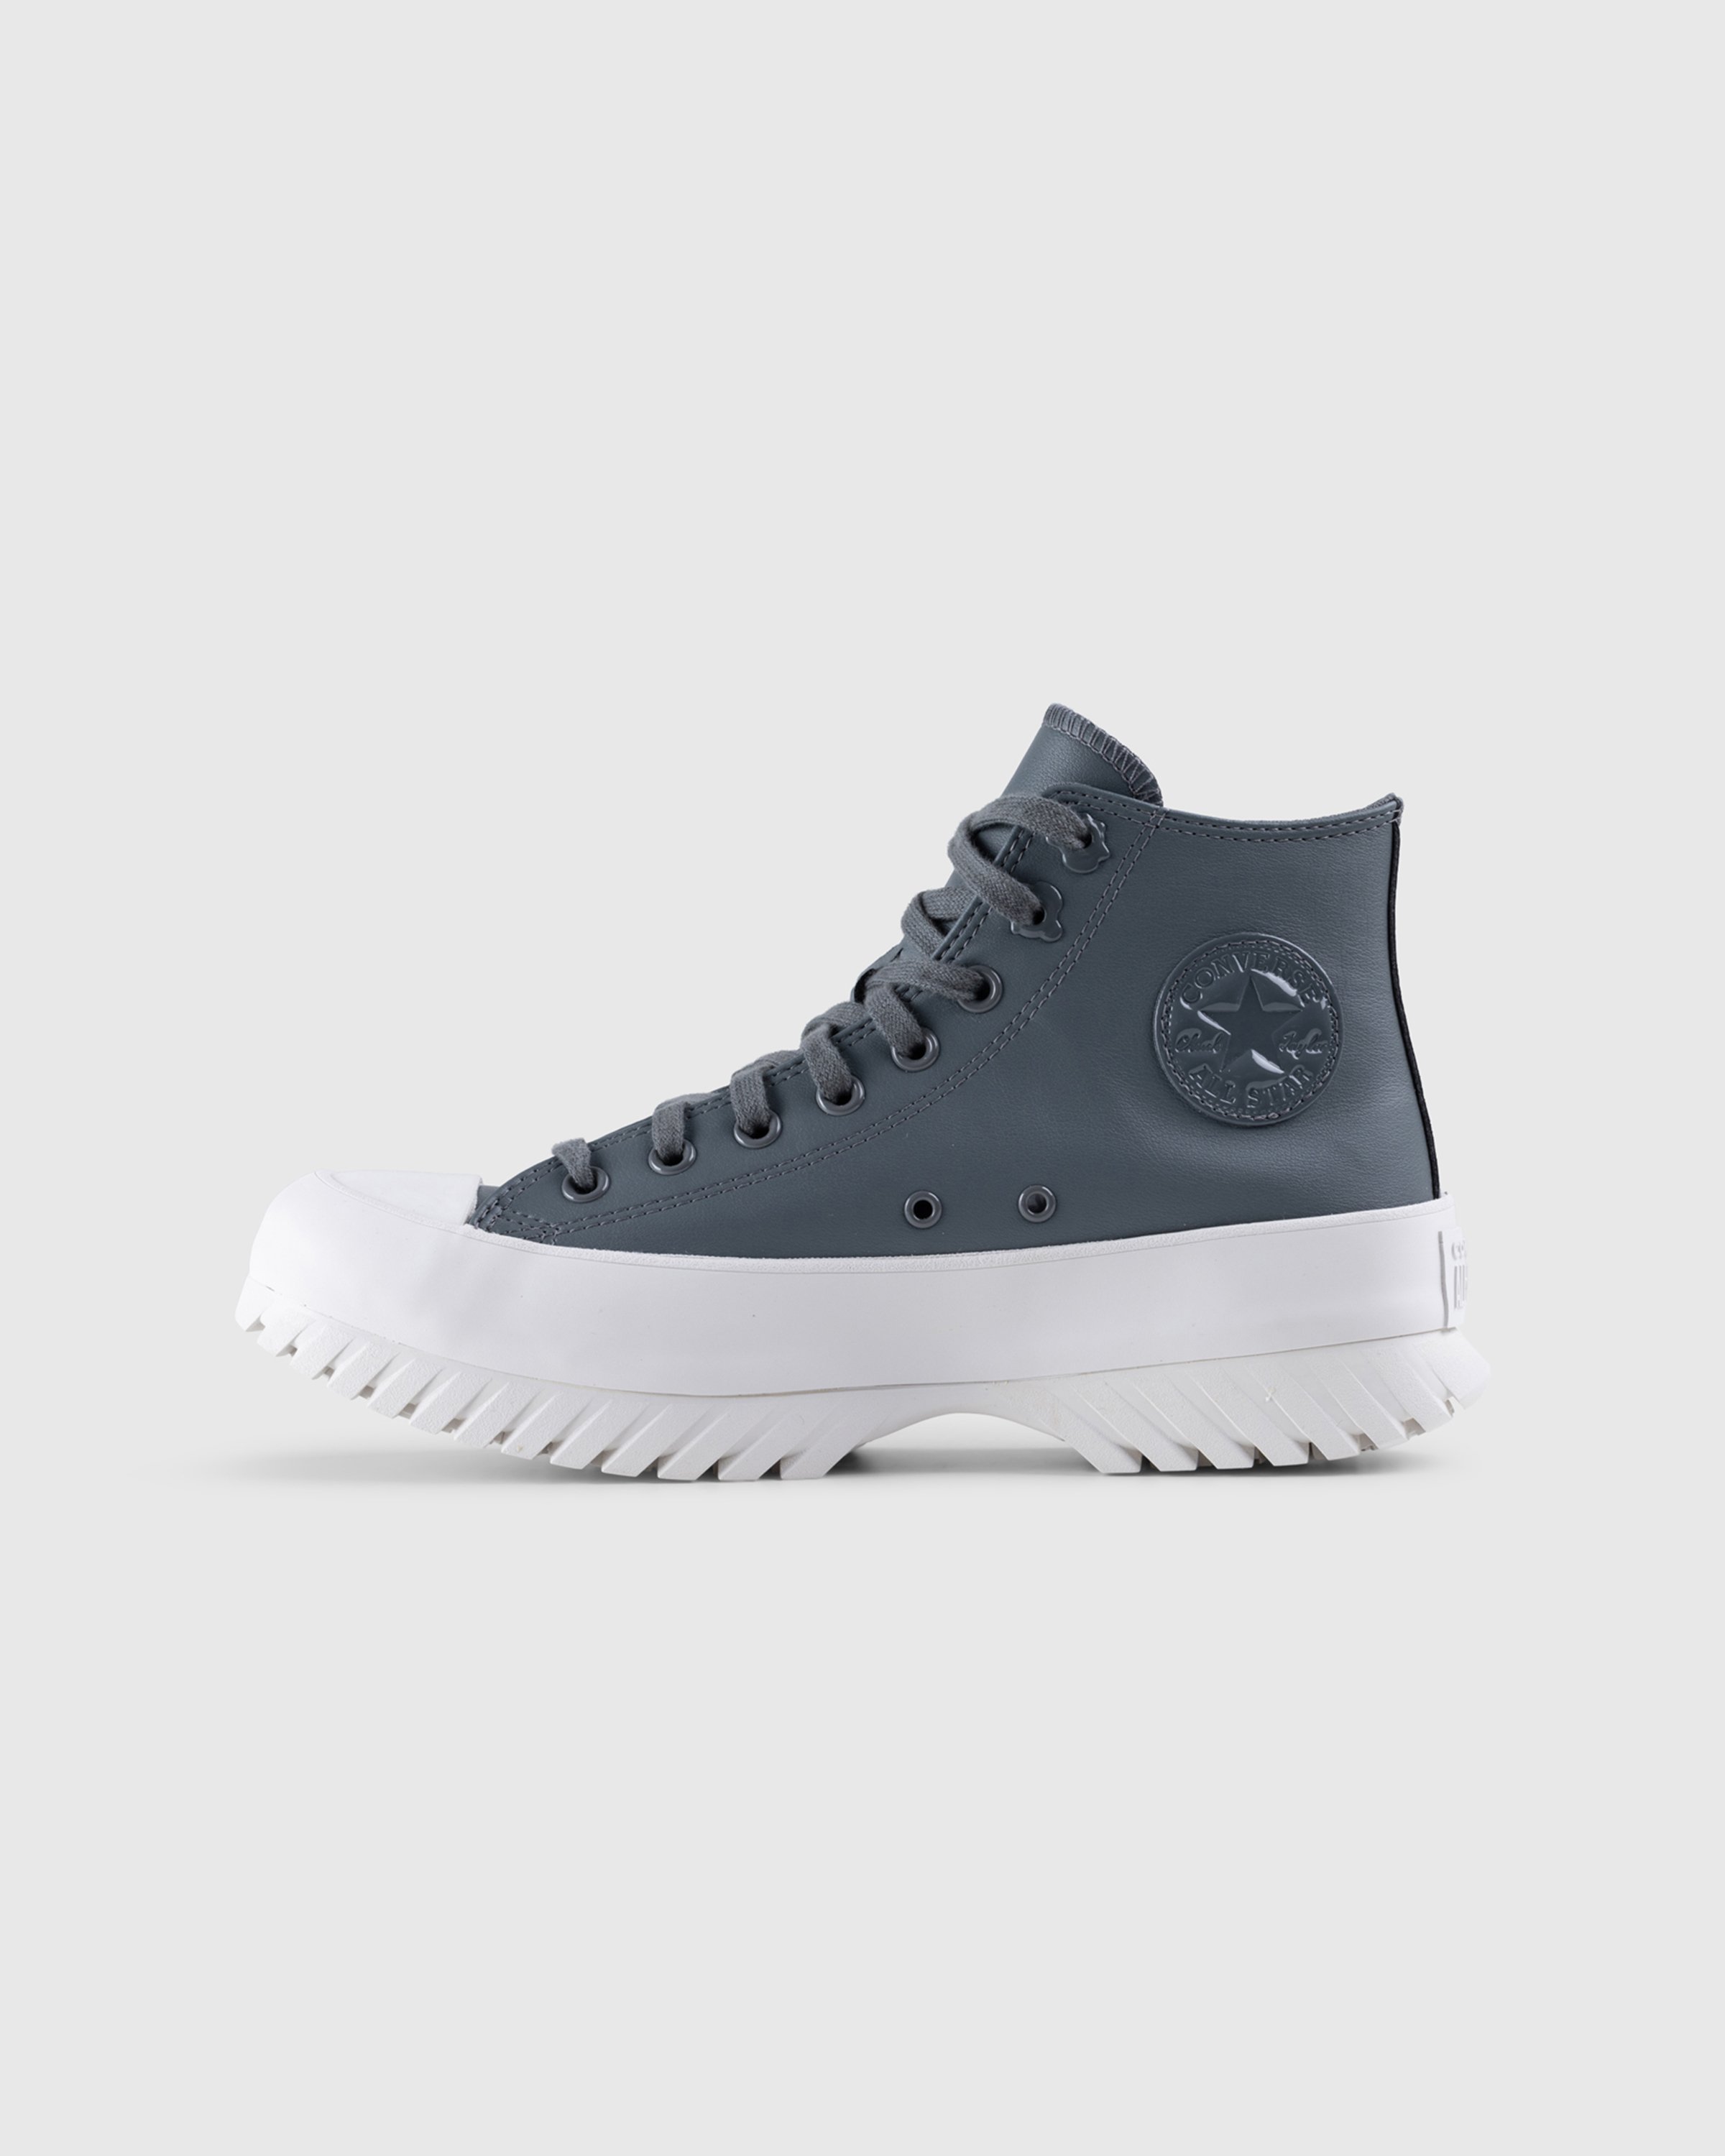 Converse - Chuck Taylor All Star Lugged 2.0 Cyber Grey - Footwear - Grey - Image 2